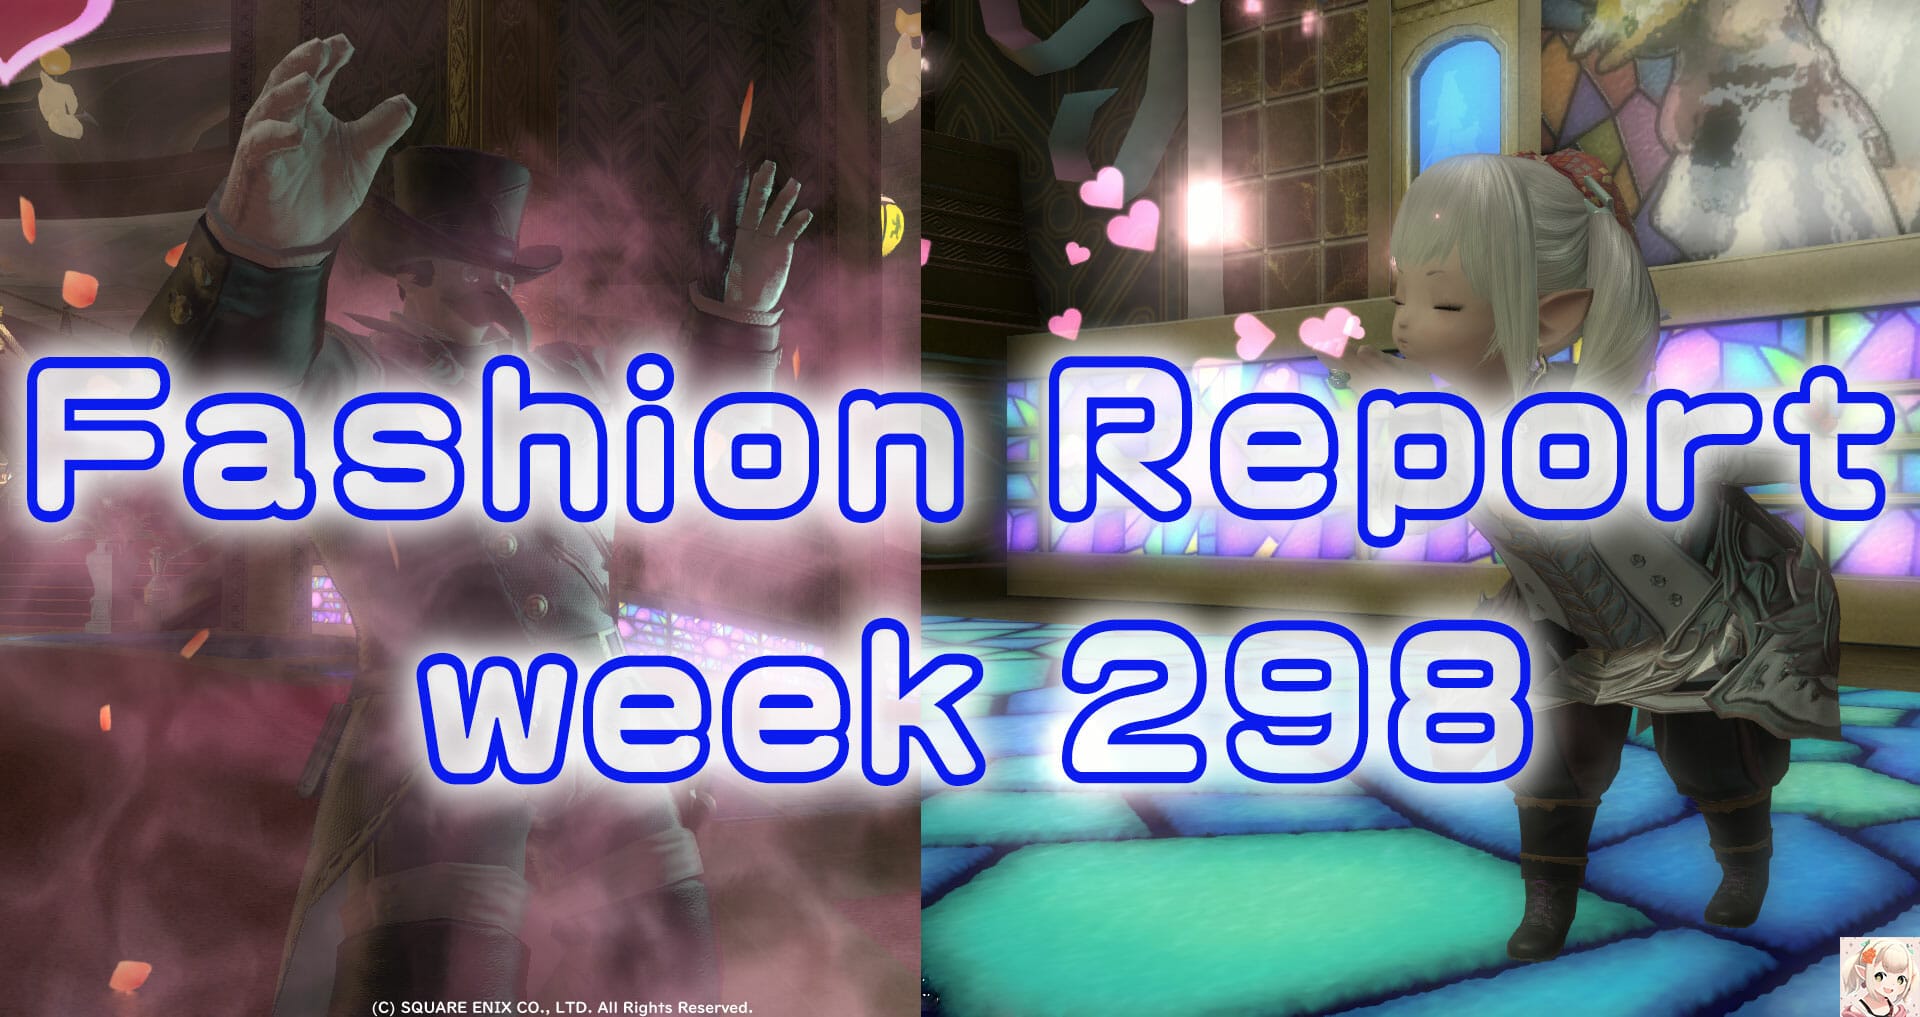 Fashion Report week 298